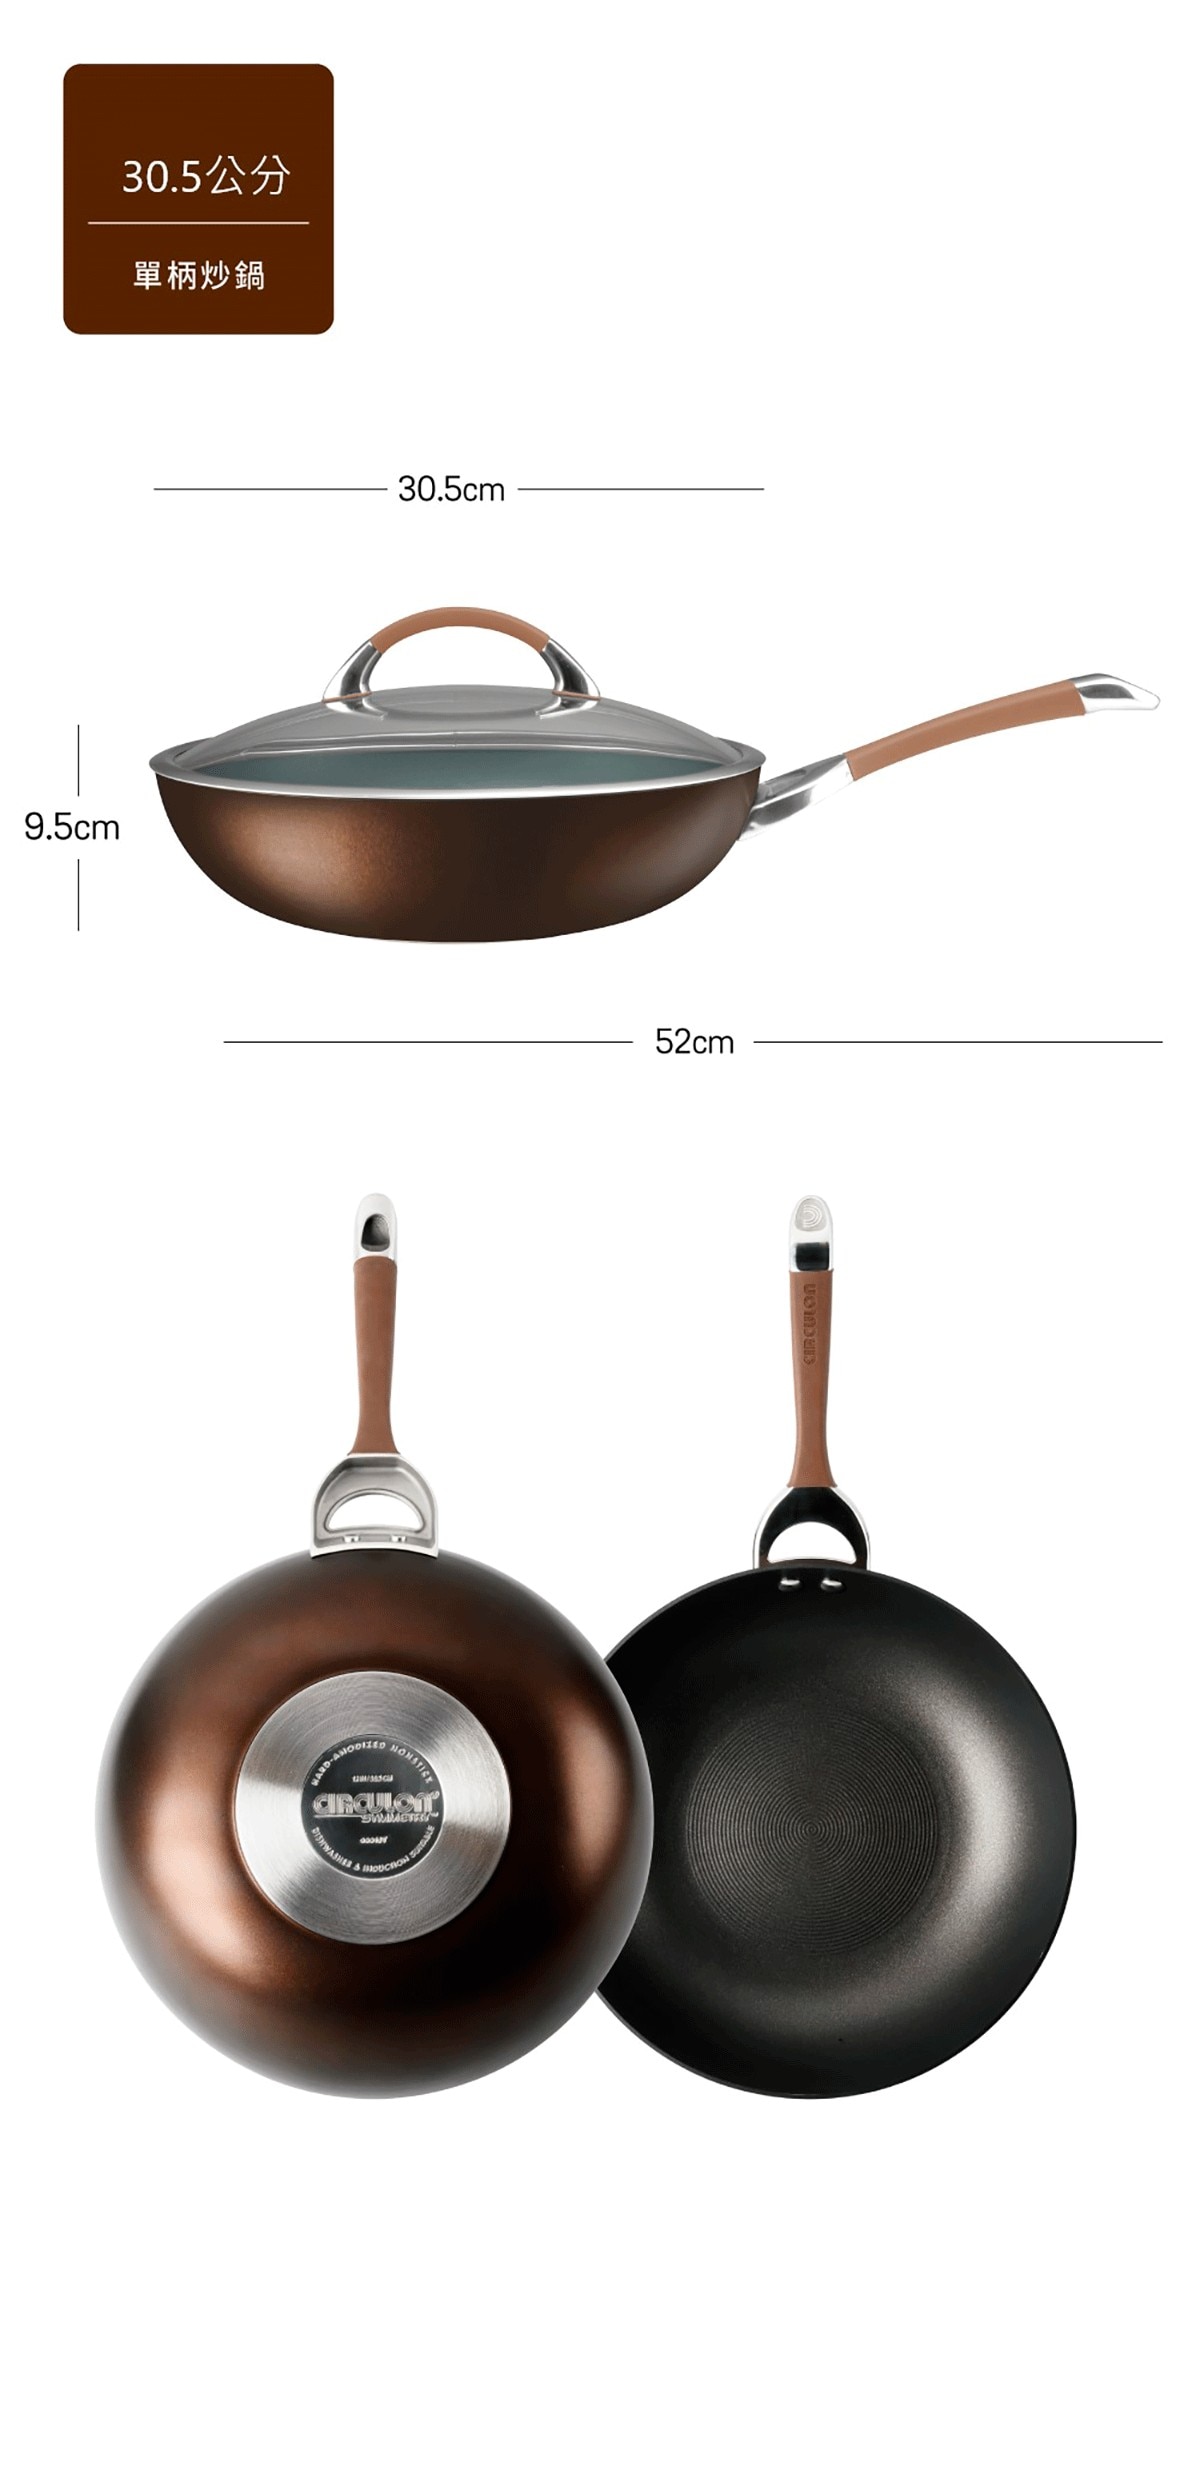 Circulon 黑鑽巧克力導磁單柄炒鍋30.5公分附鍋蓋，精緻時尚的巧克力色調，輕巧耐用陽極硬化鋁合金鍋體，輕量化薄型導磁複合鍋底。